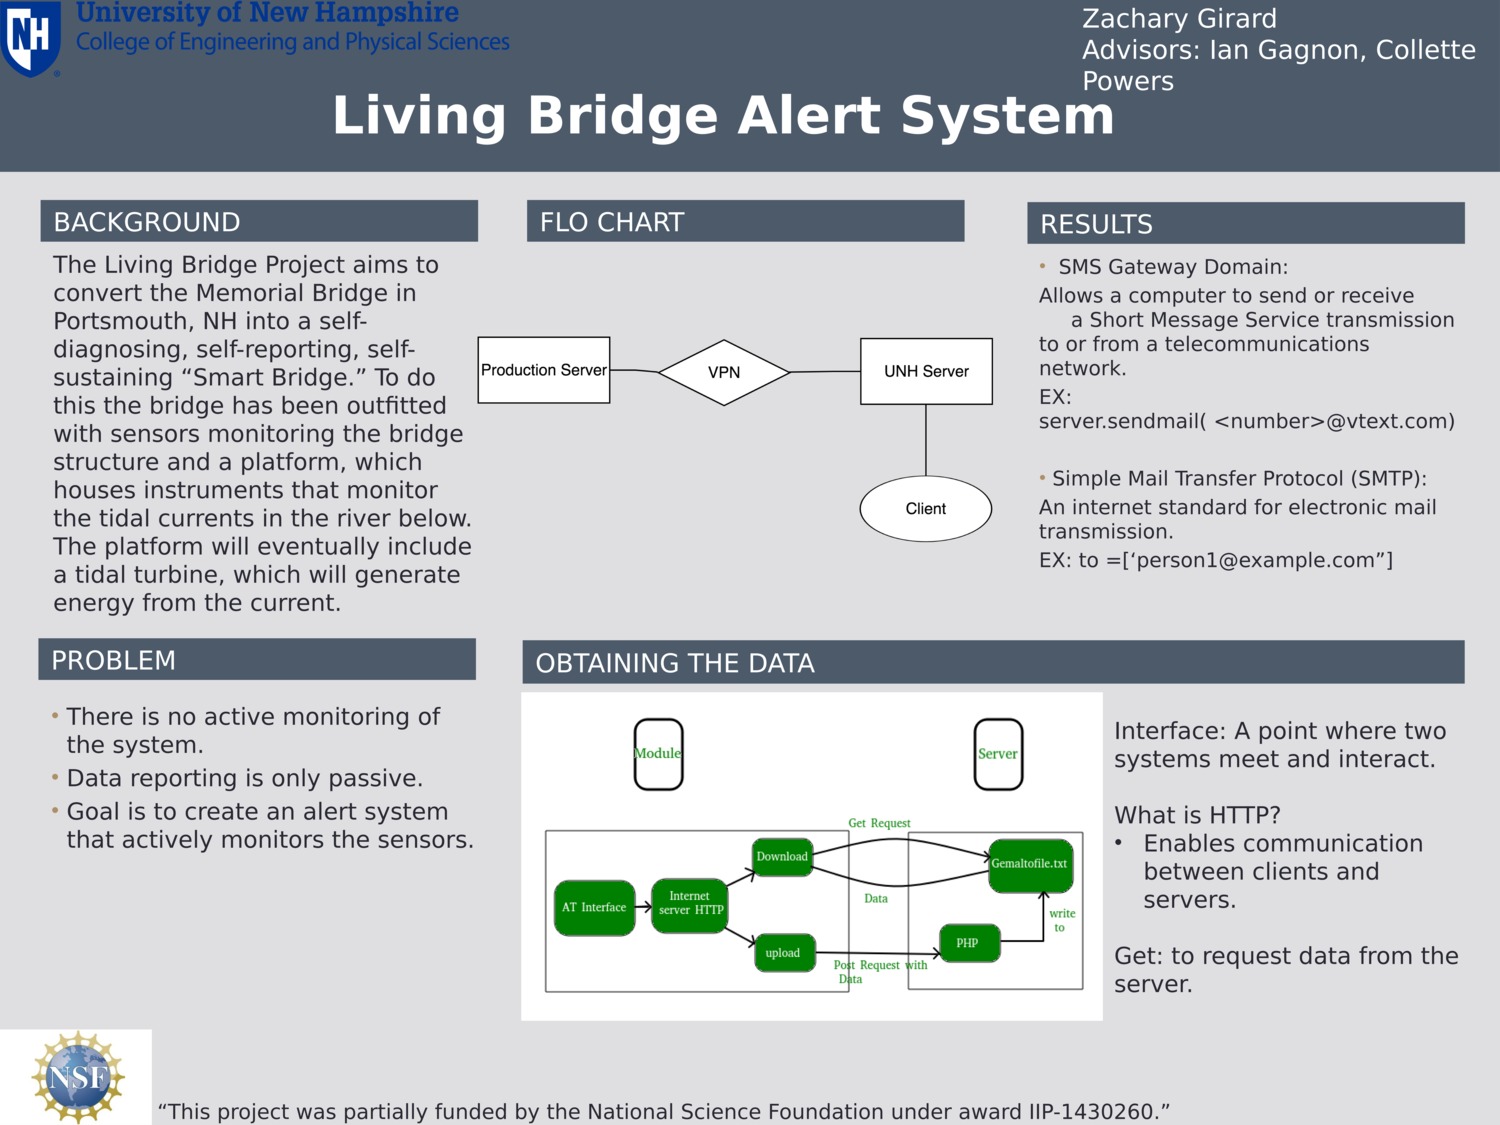 Living Bridge Alert System by zag2000